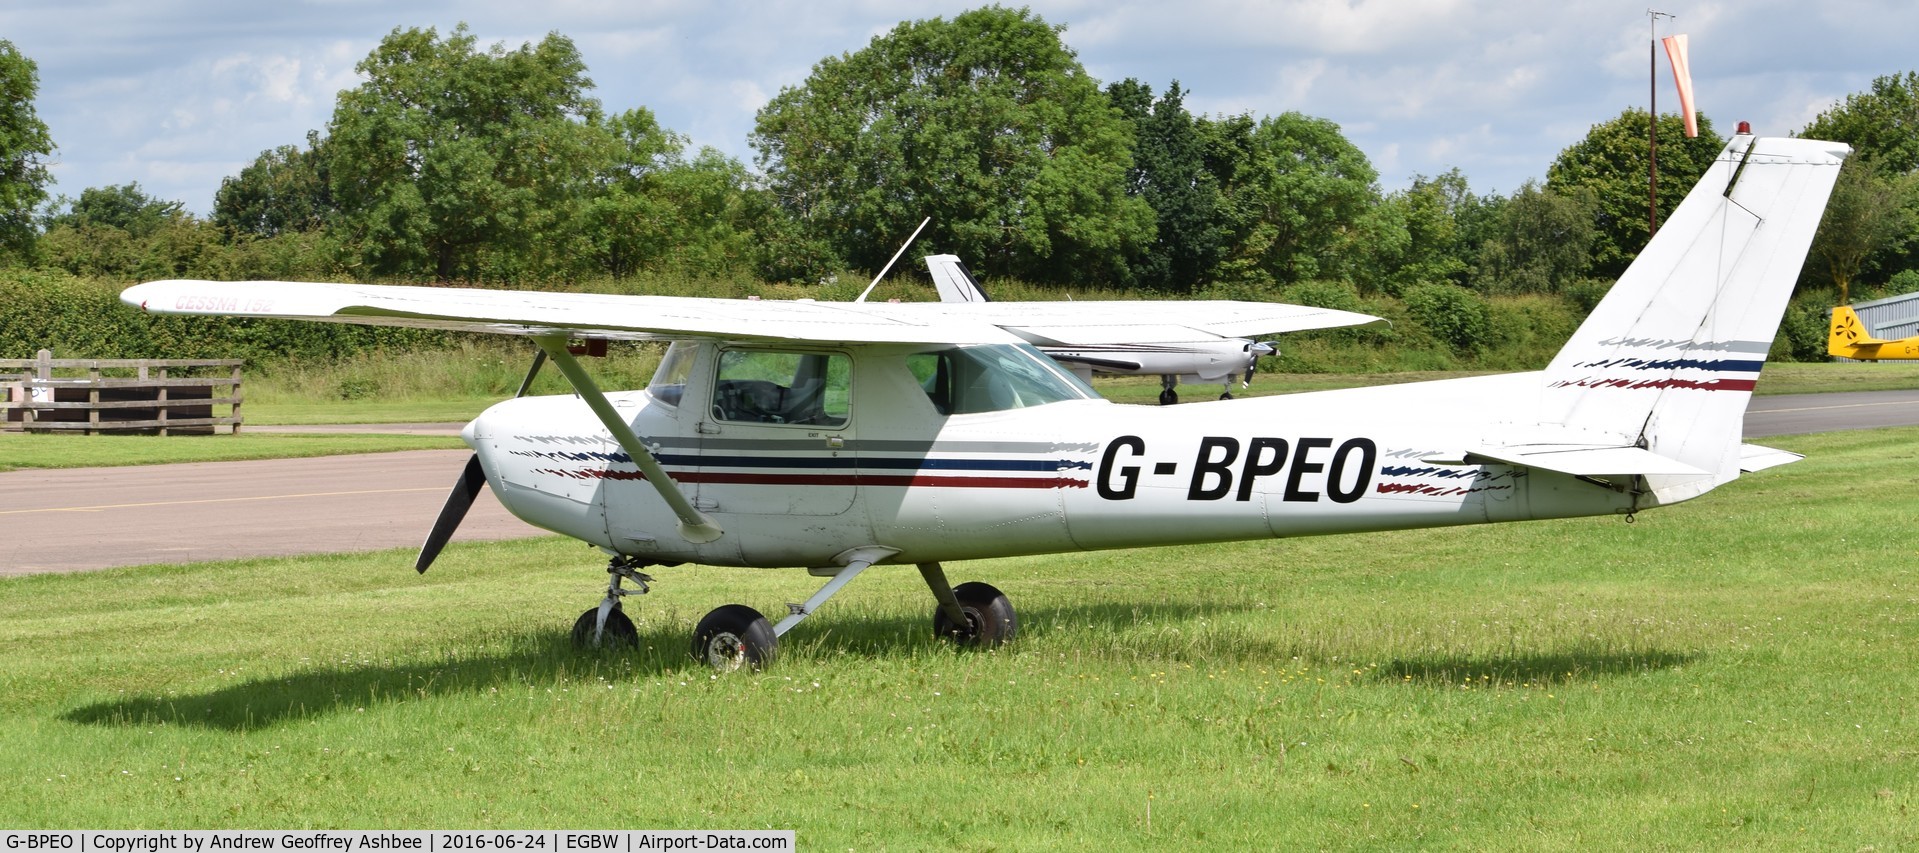 G-BPEO, 1980 Cessna 152 C/N 152-83775, G-BPEO at Wellesbourne.